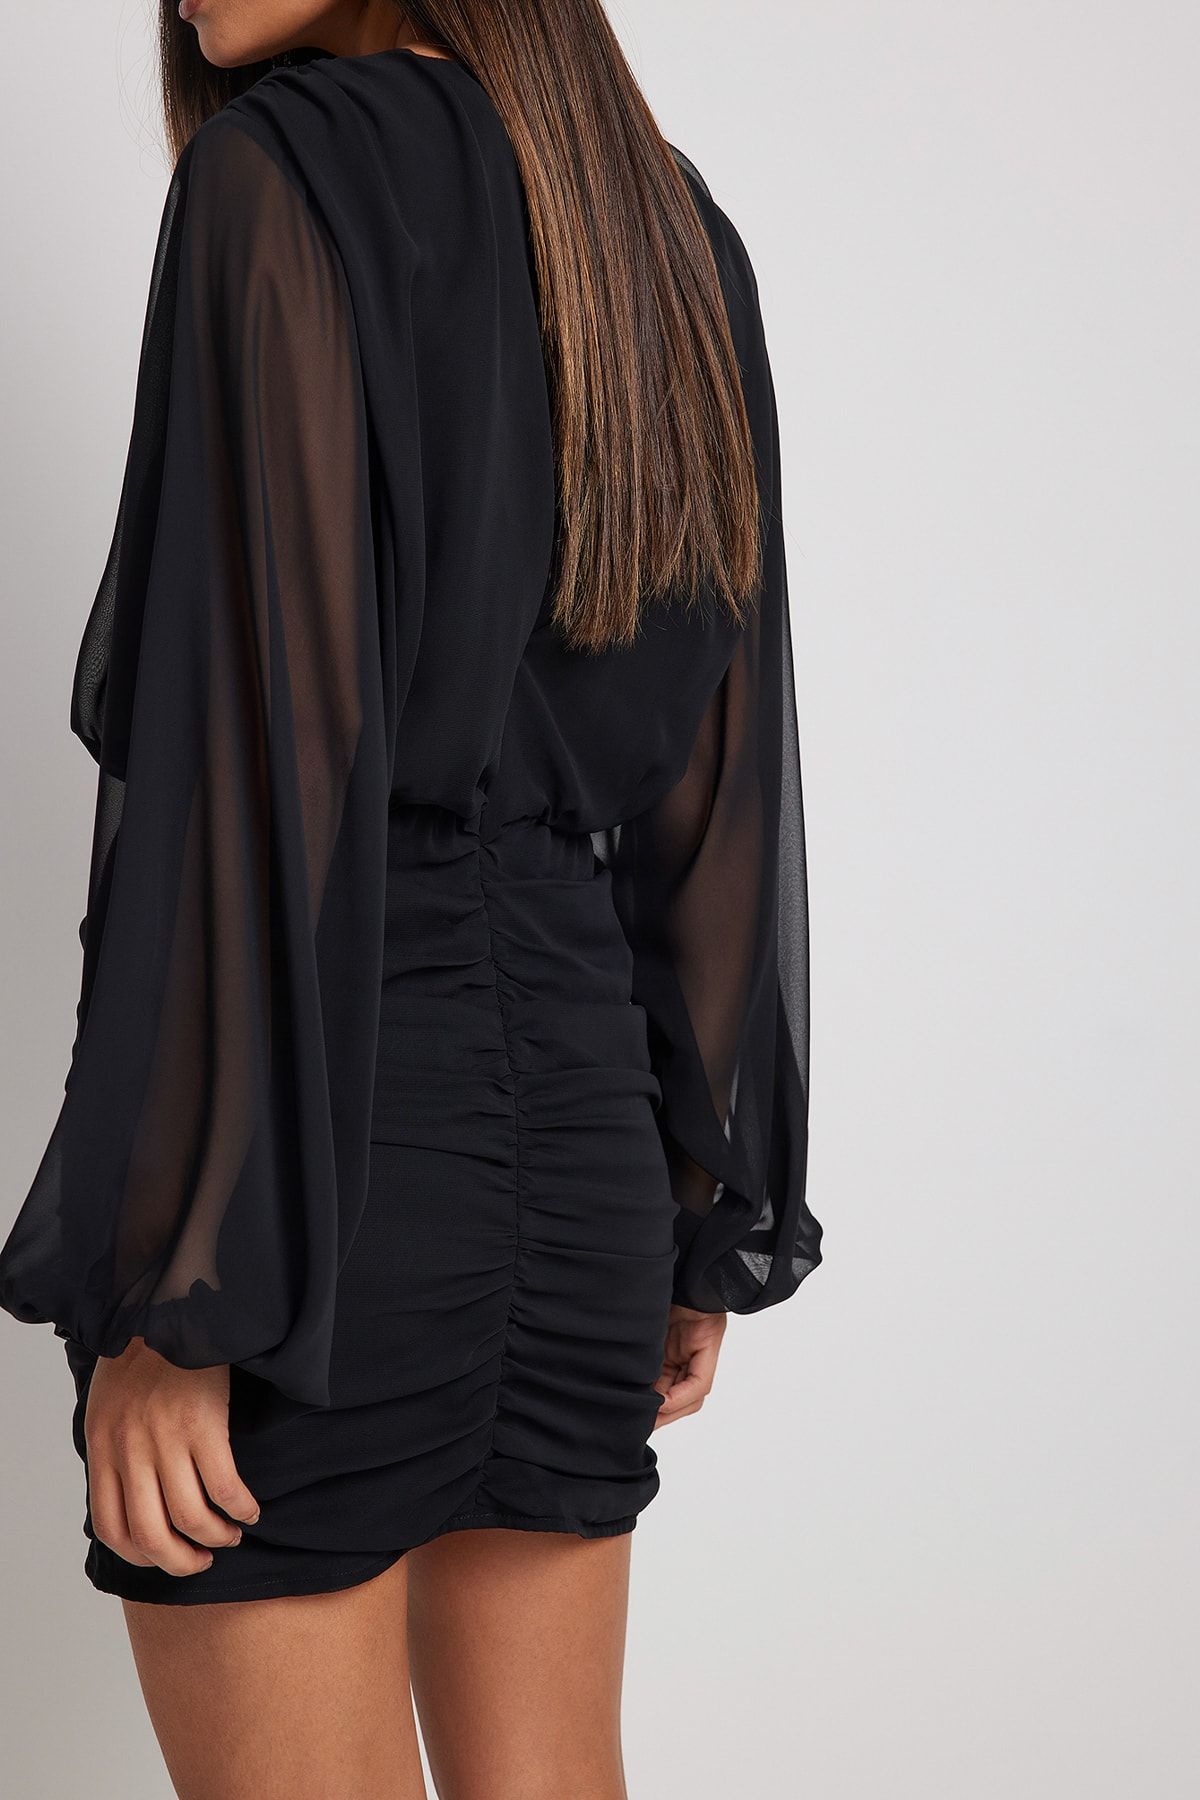 Black Long Sleeve Chiffon Ruched Bodycon Dress